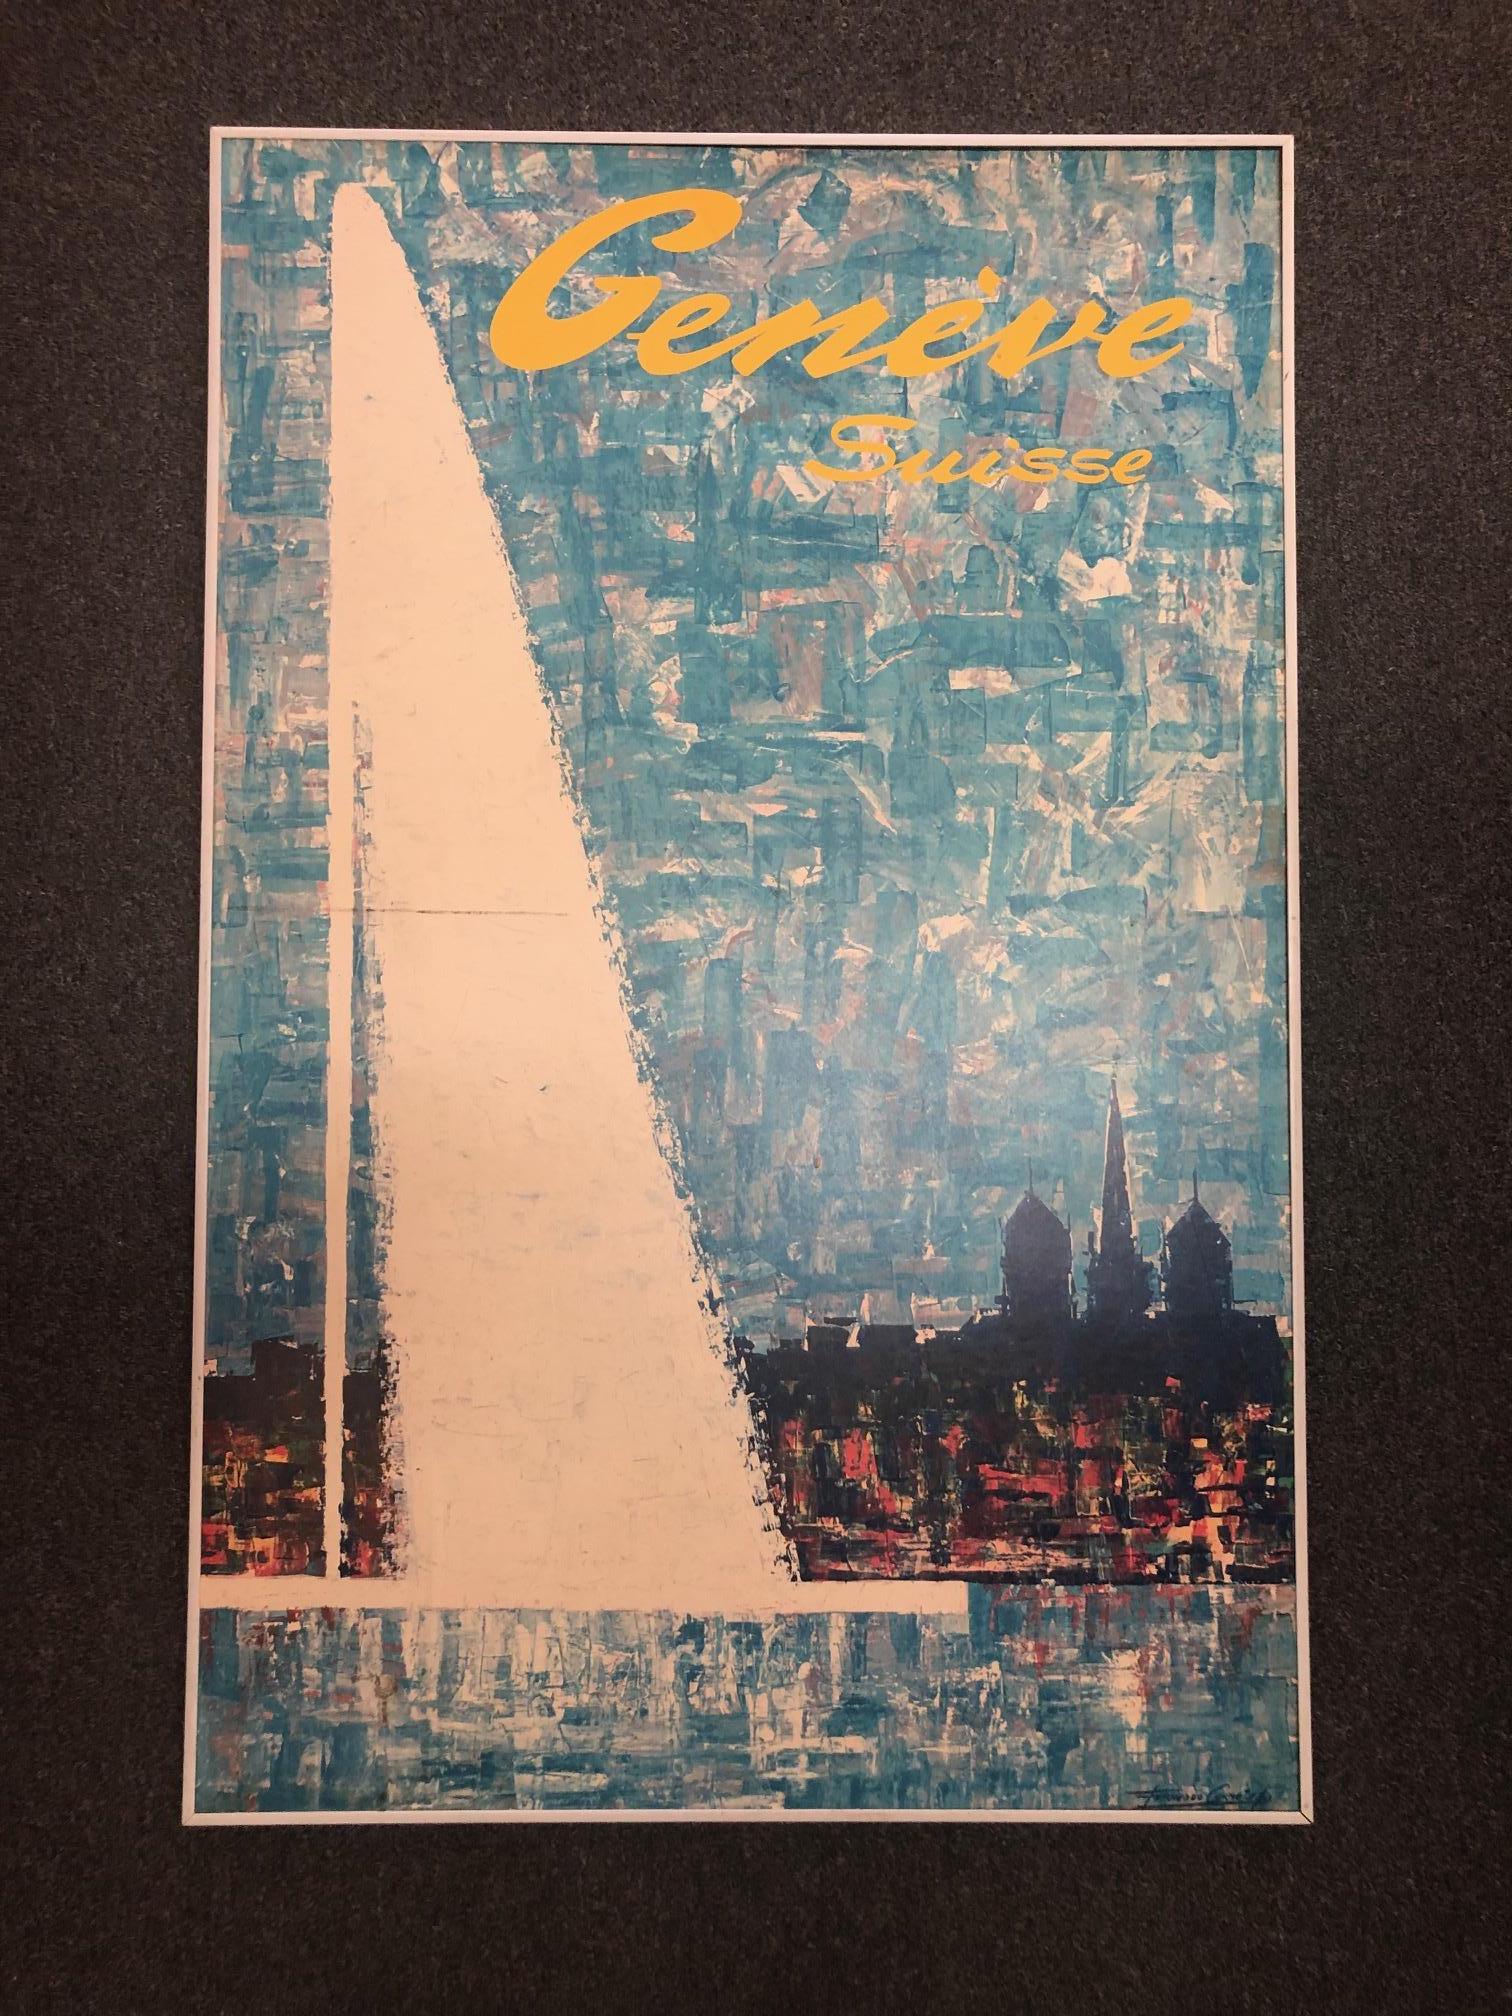 Paper Vintage Travel Poster 'Ginevra Svizzera' by Fernando Correta, 1968